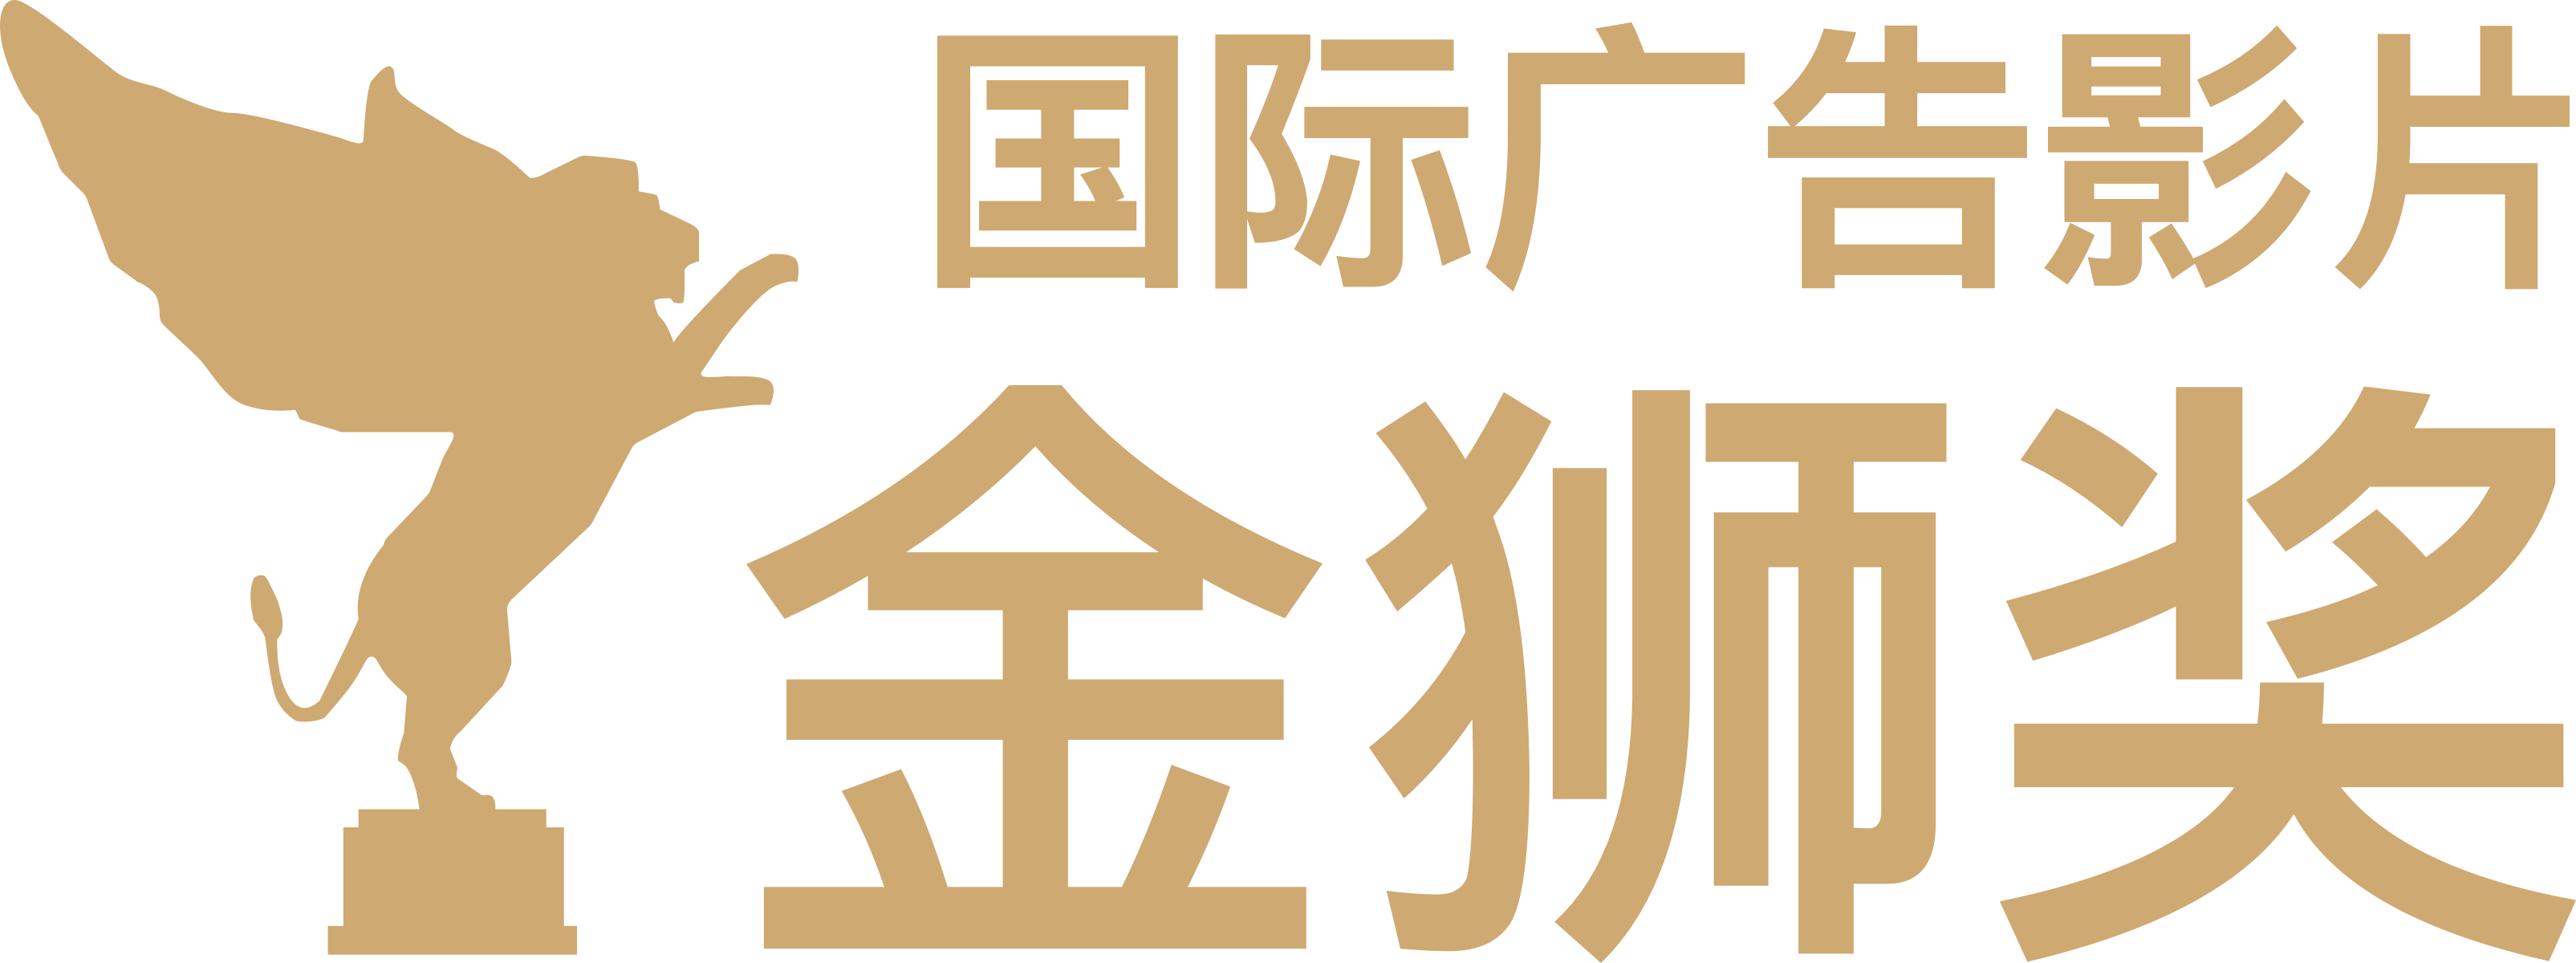 金狮奖新logo-2222.png